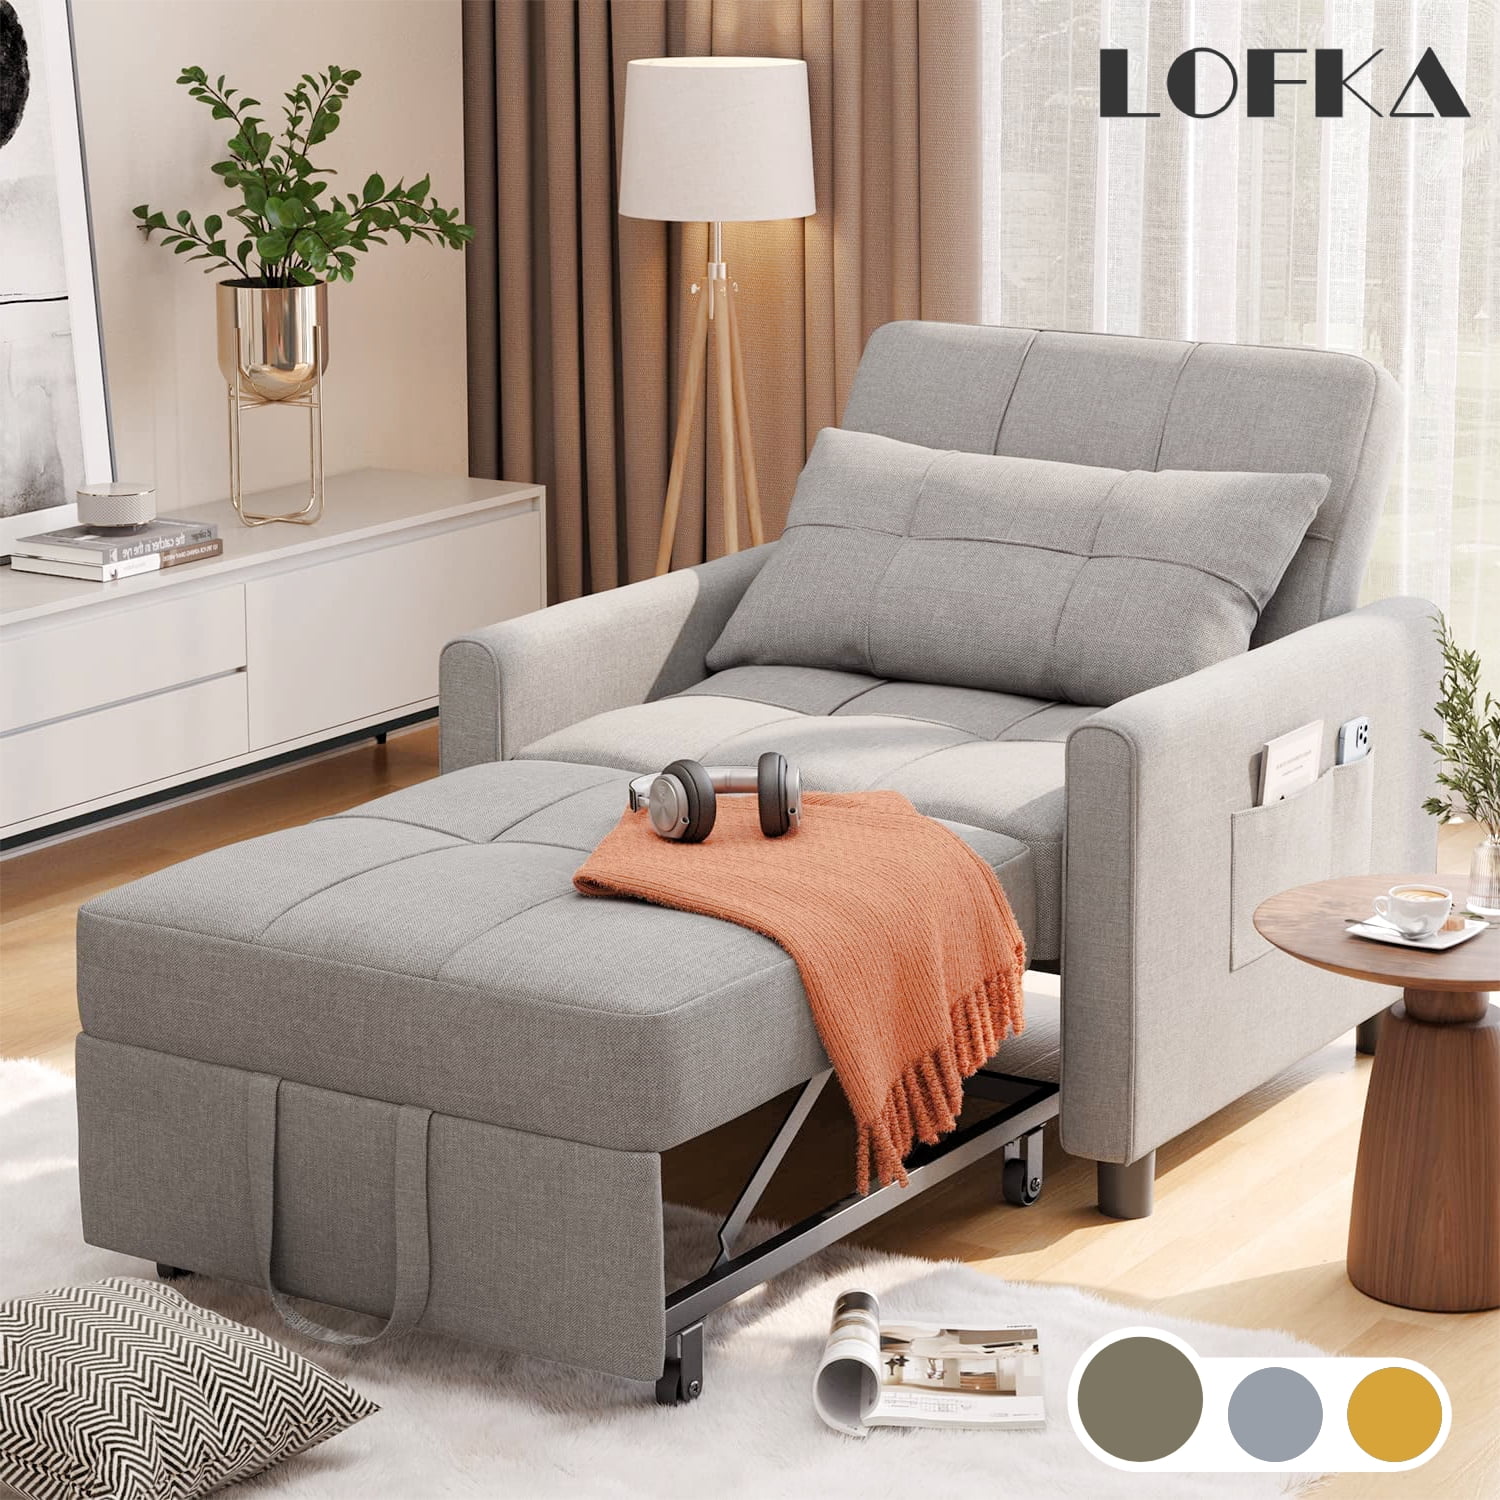 Lofka Sofa Bed บ านของเรา Thailand U